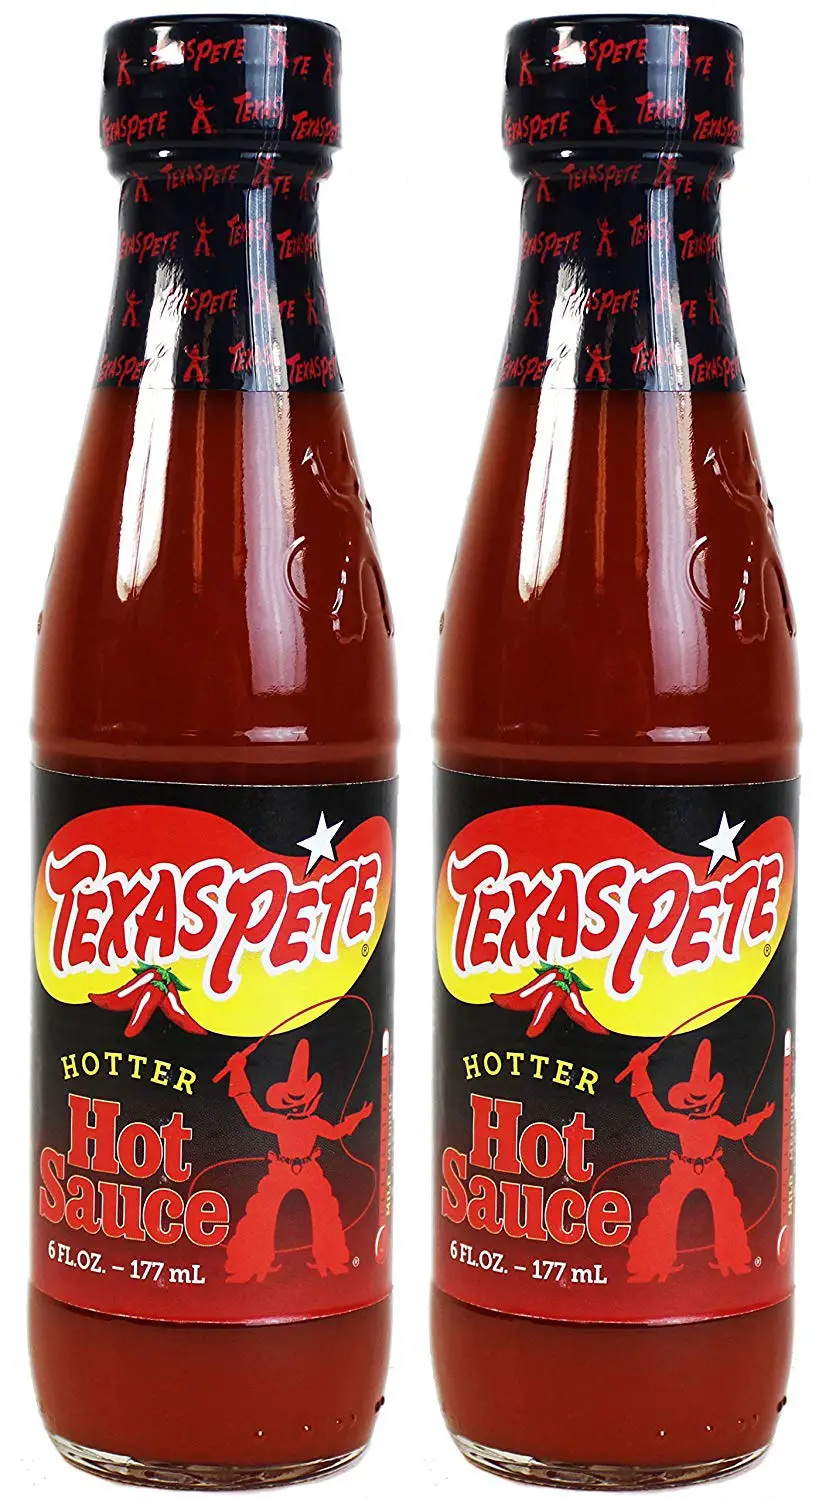 Texas Pete Hotter Hot Sauce (6 oz Bottles) 2 Pack by Texas Pete ...